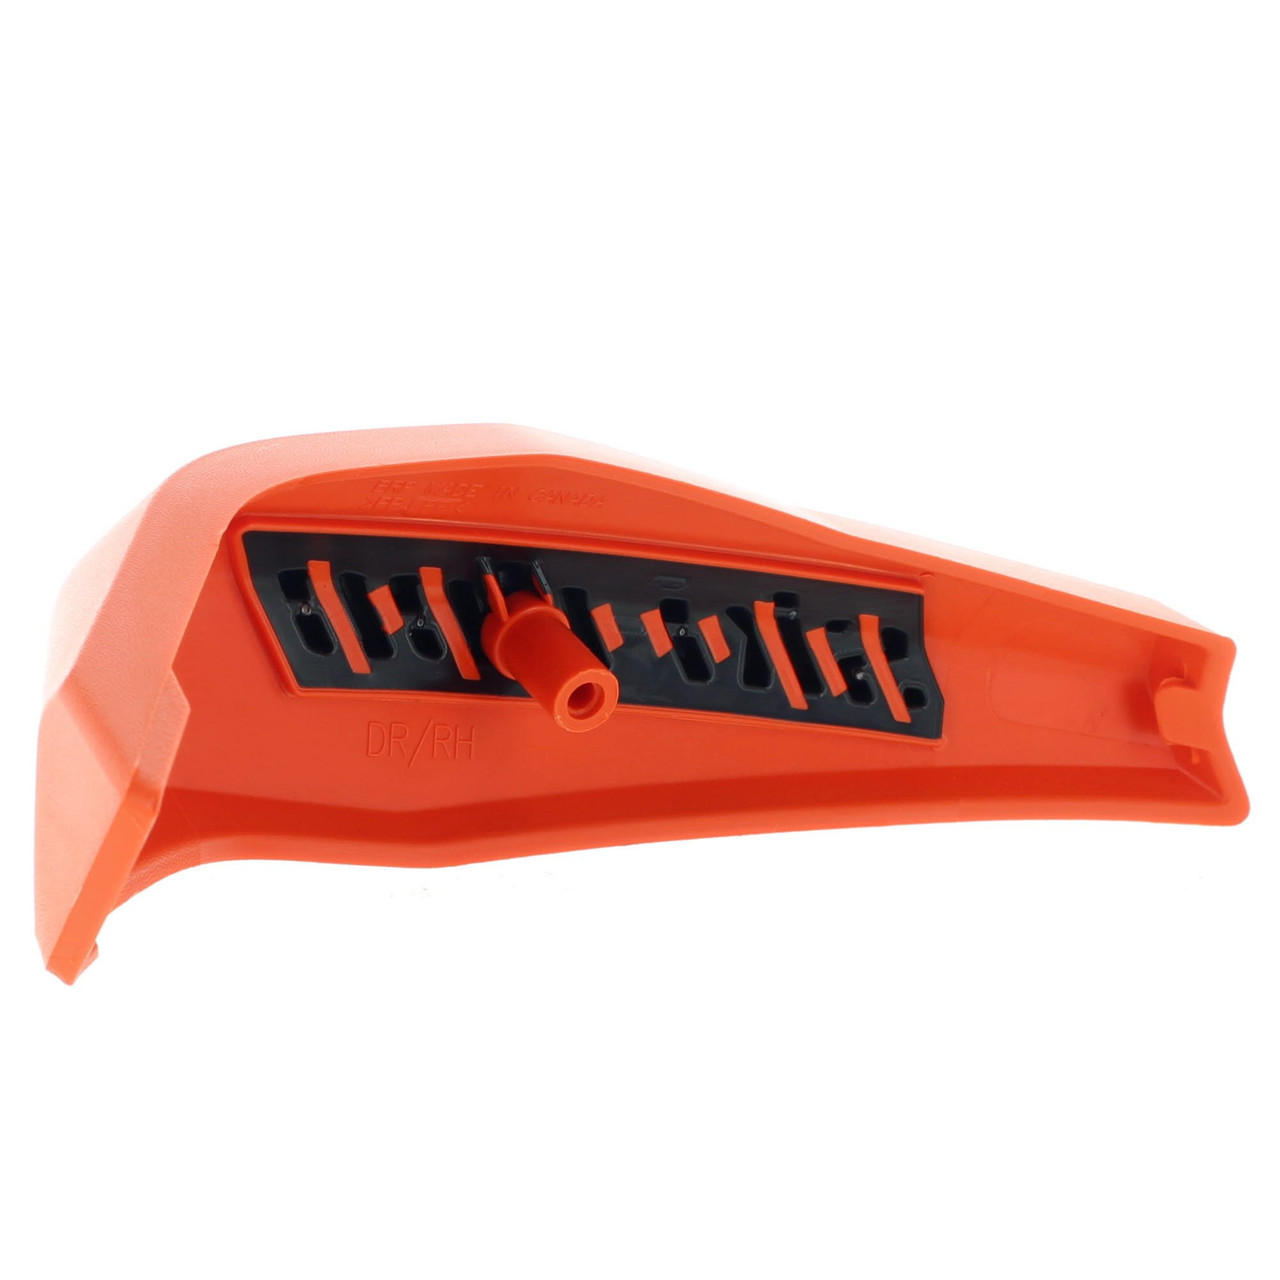 Ski-Doo New OEM Right Hand Orange Handguard Cap, 517305615